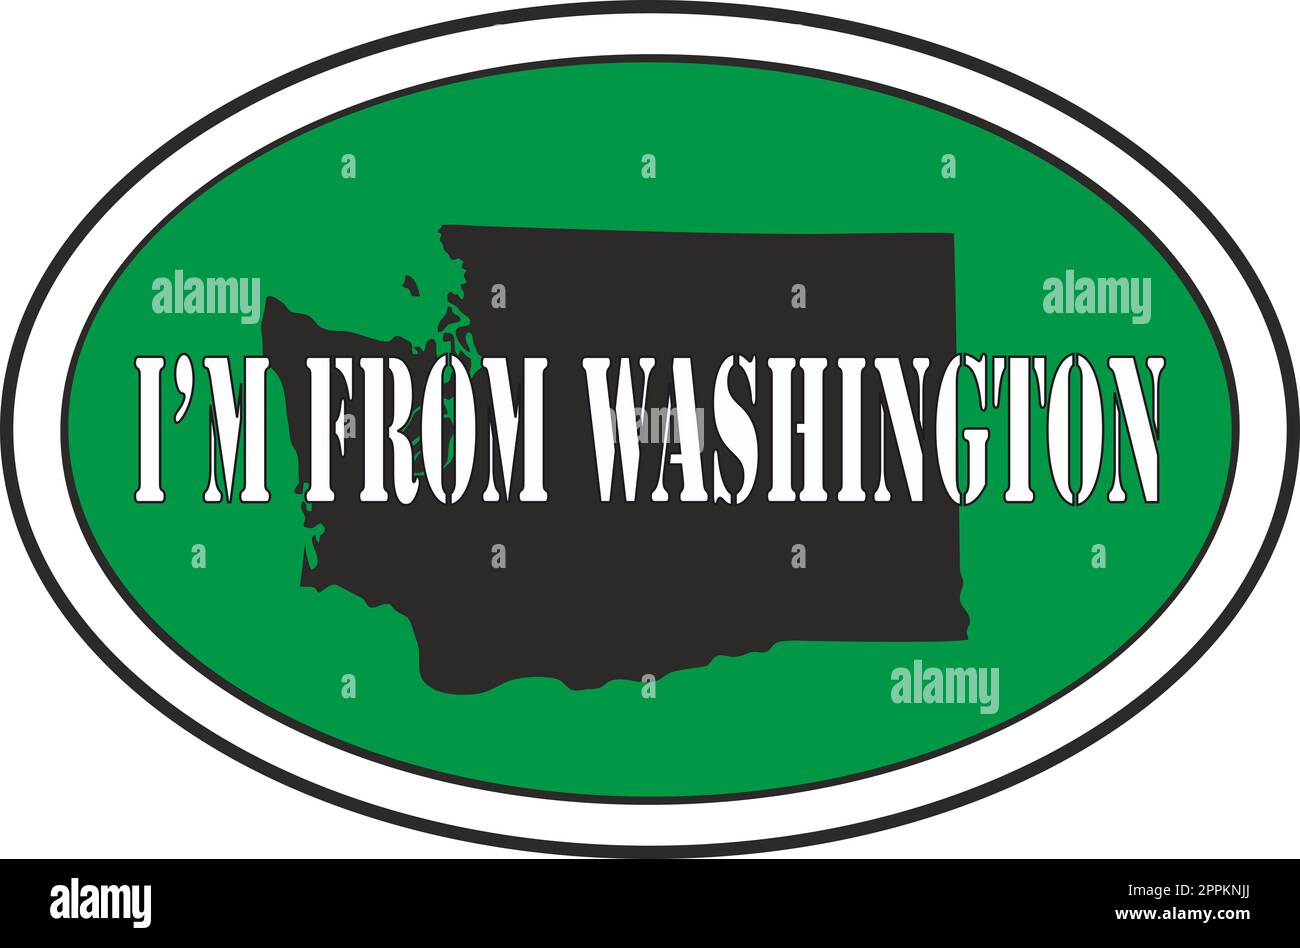 Oval sticker with text I am from Washington. vehicle badge Stock Photo